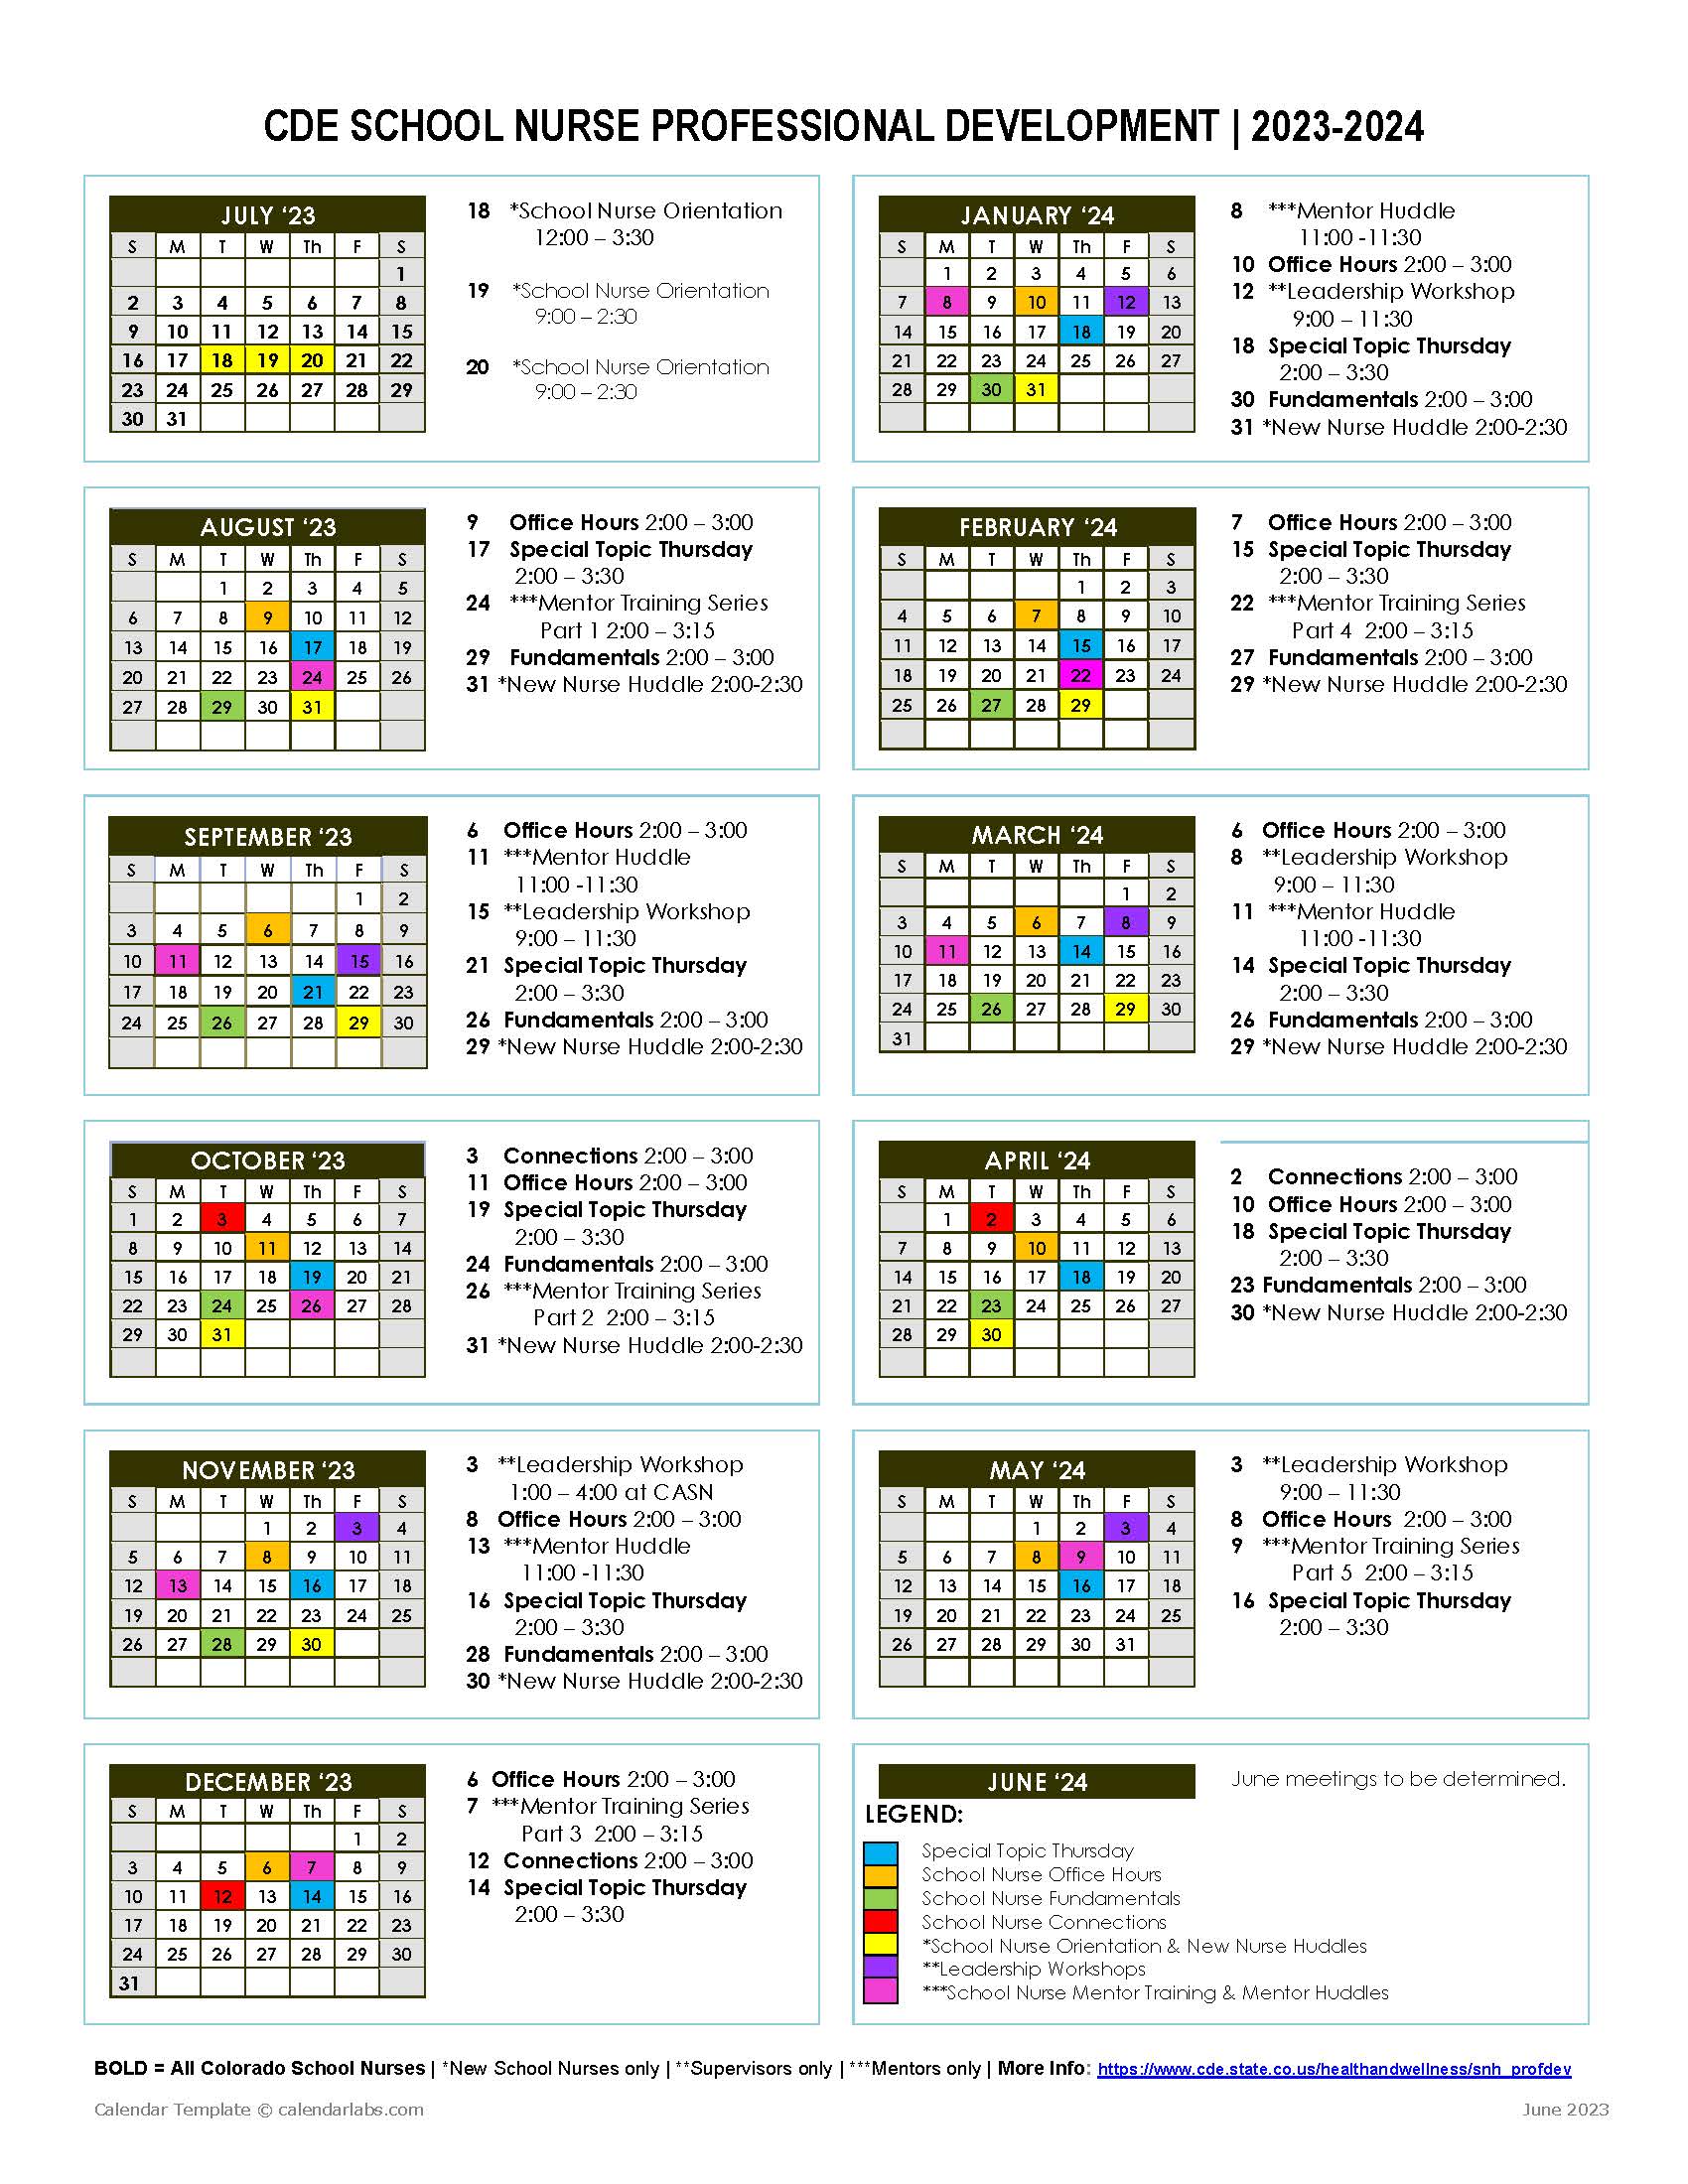 School Nurse Professional Development Calendar